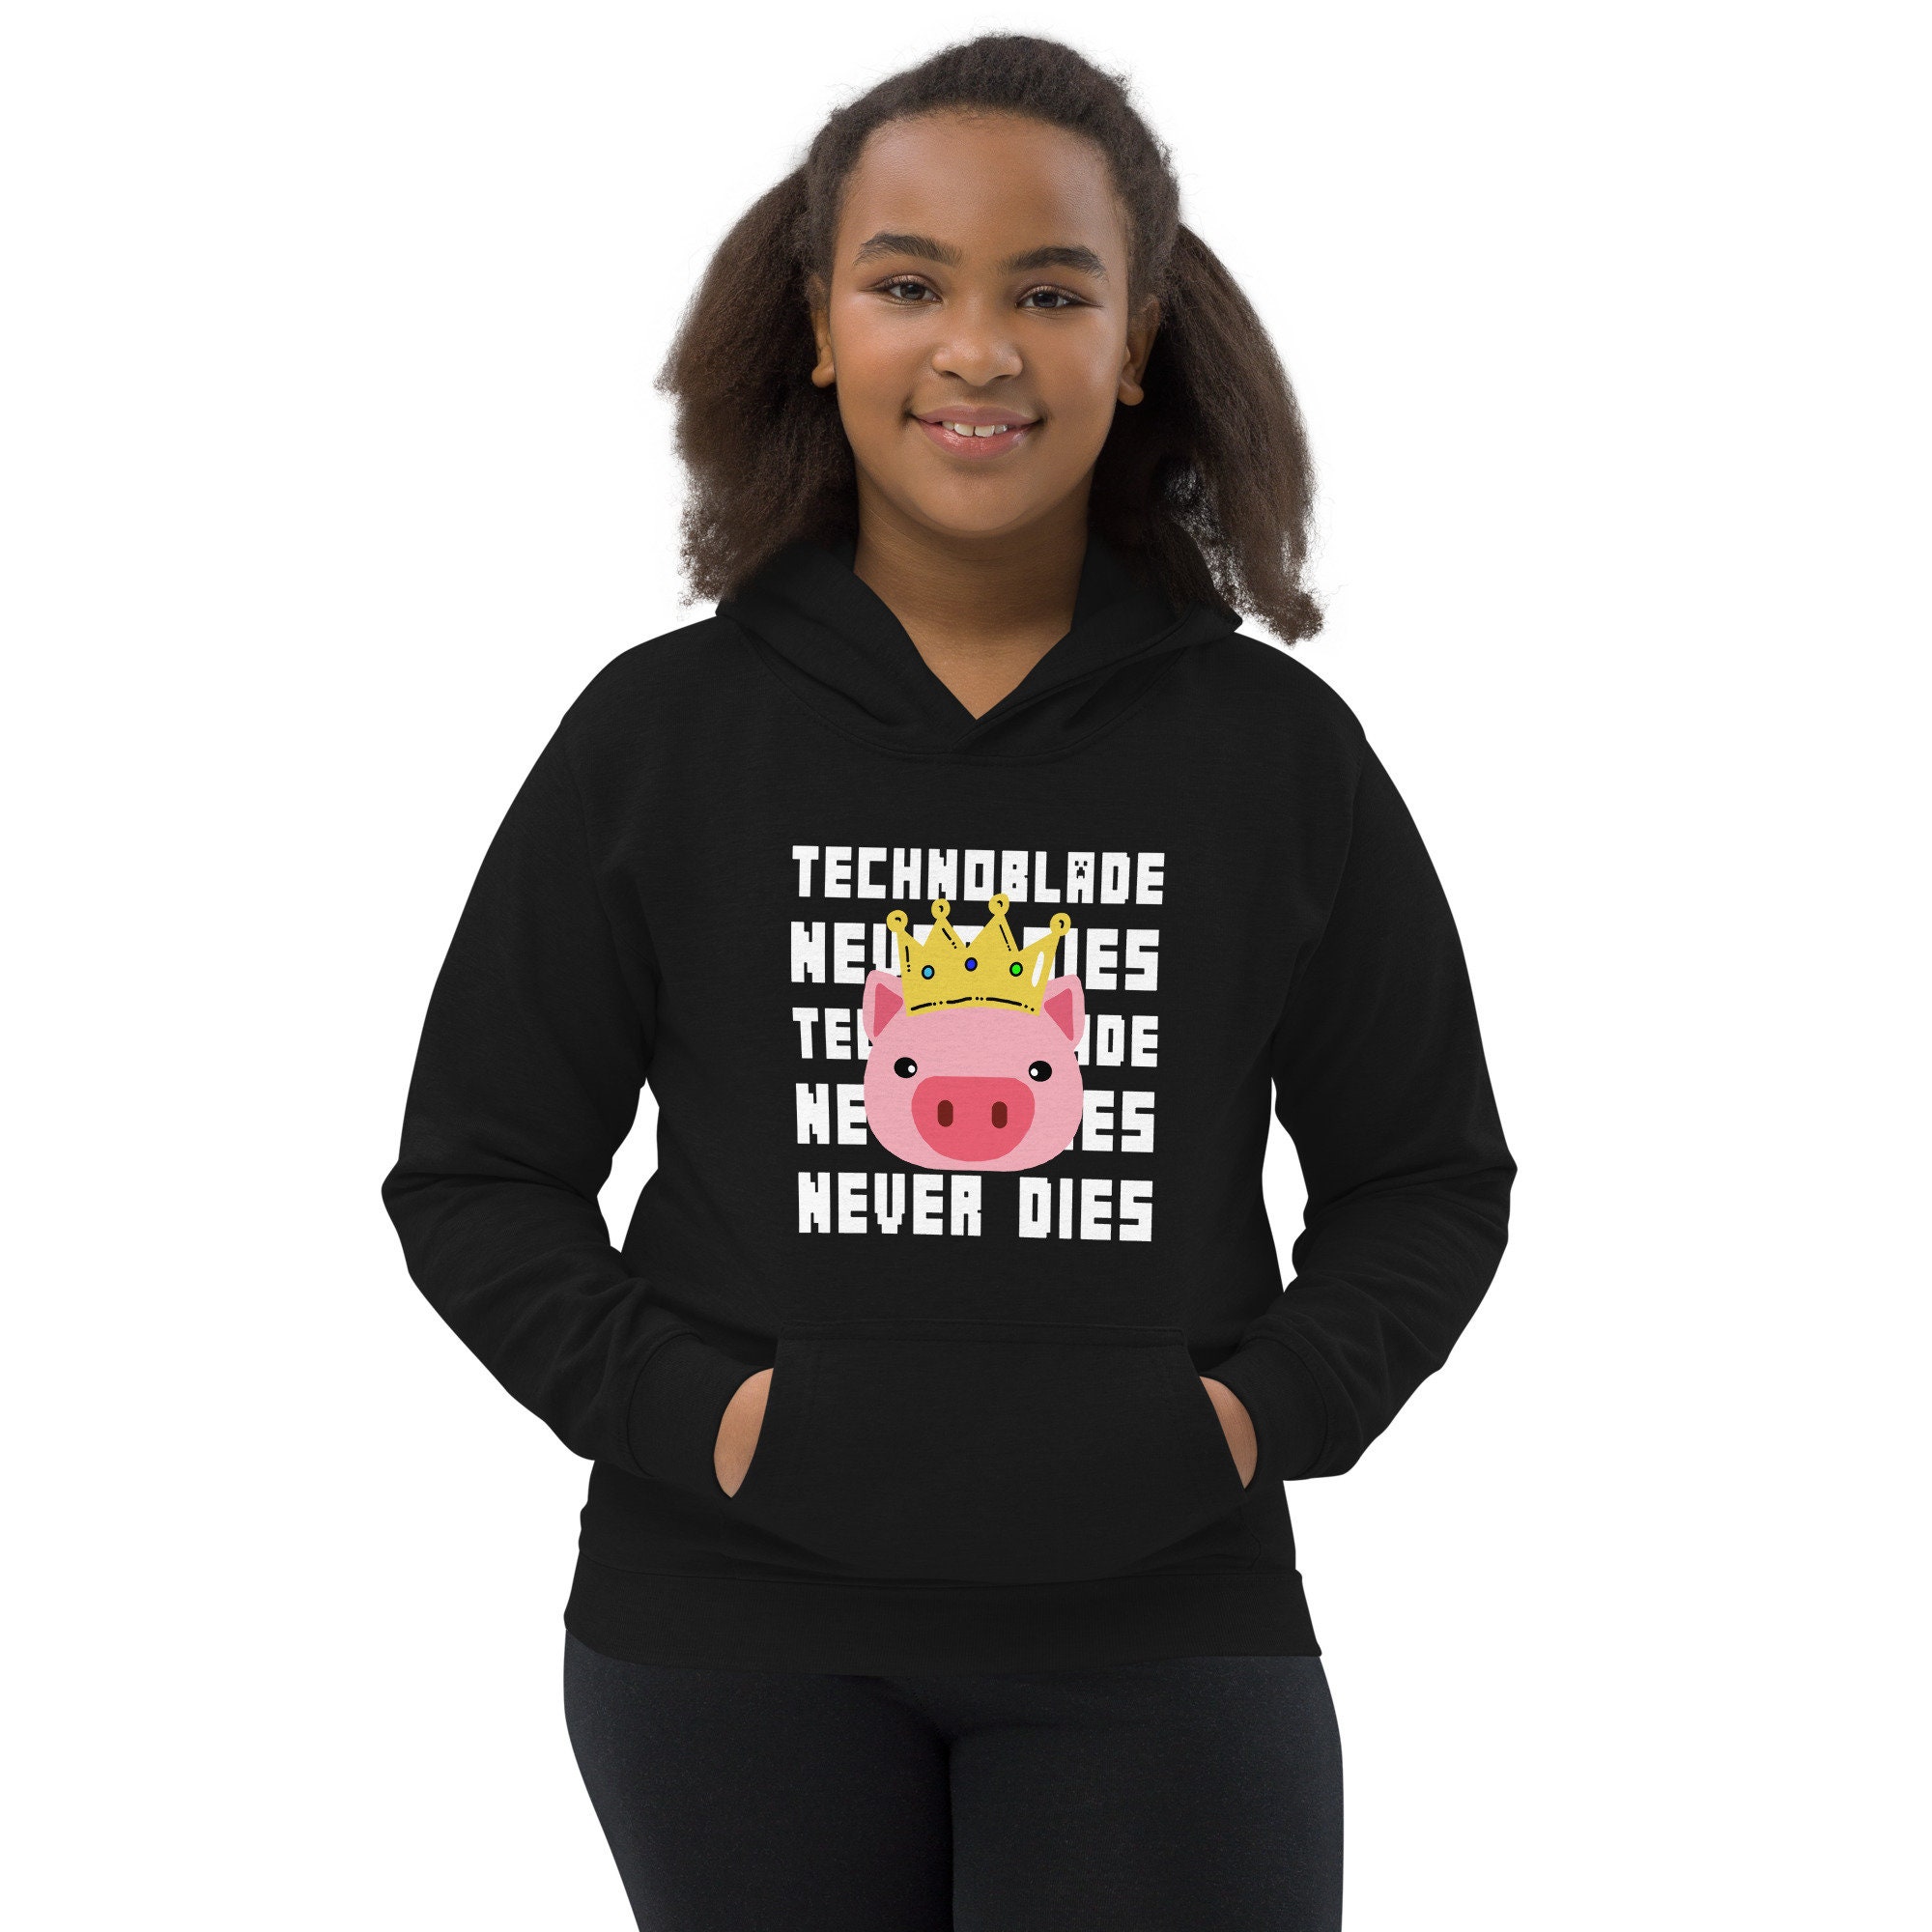 Technoblade never dies vintage shirt, hoodie, sweater, long sleeve